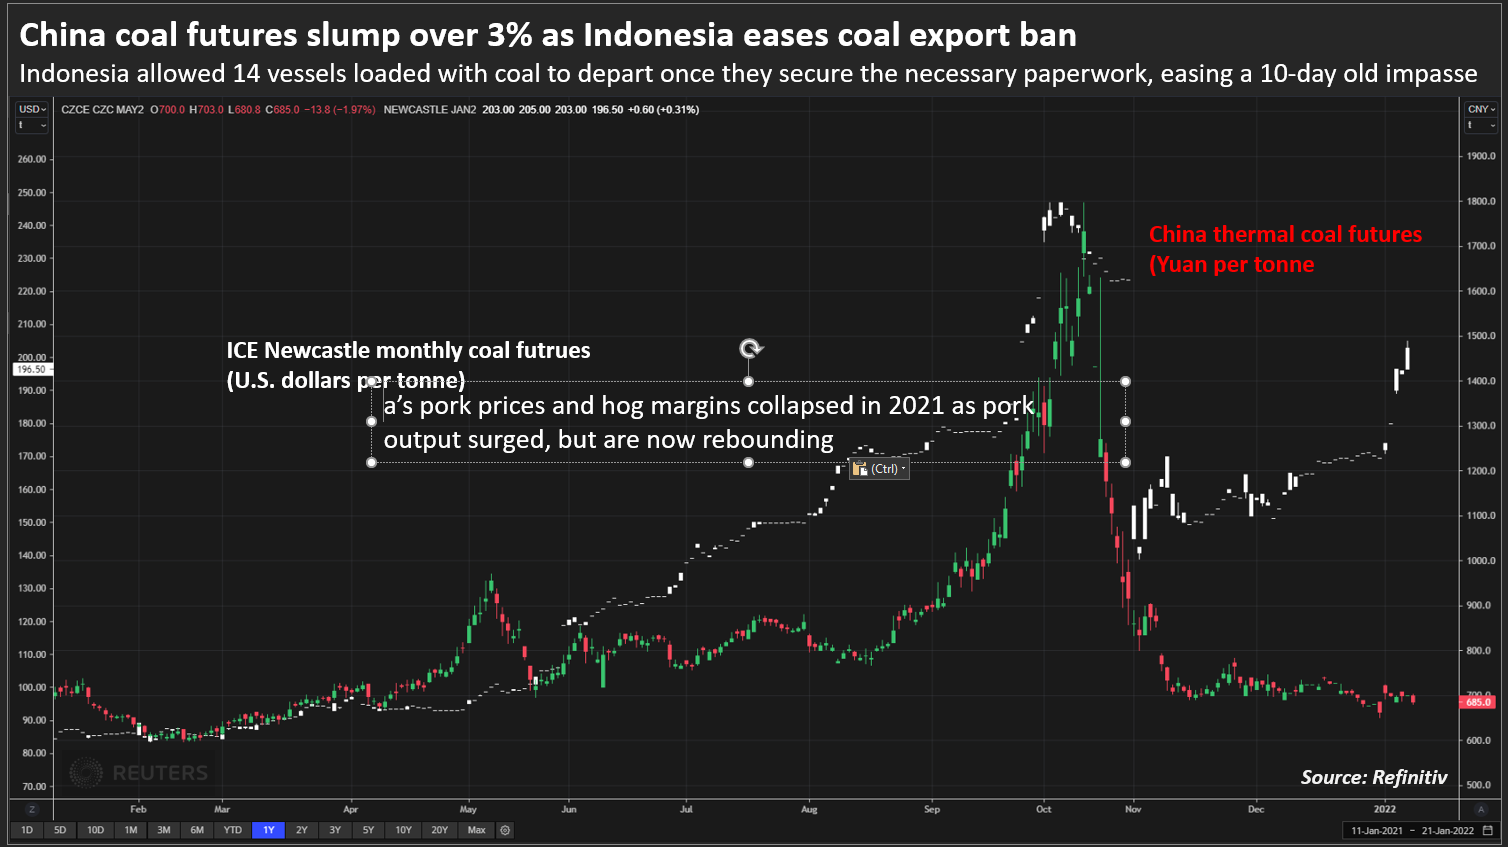 China coal futures slump over 3% as Indonesia eases coal export ban